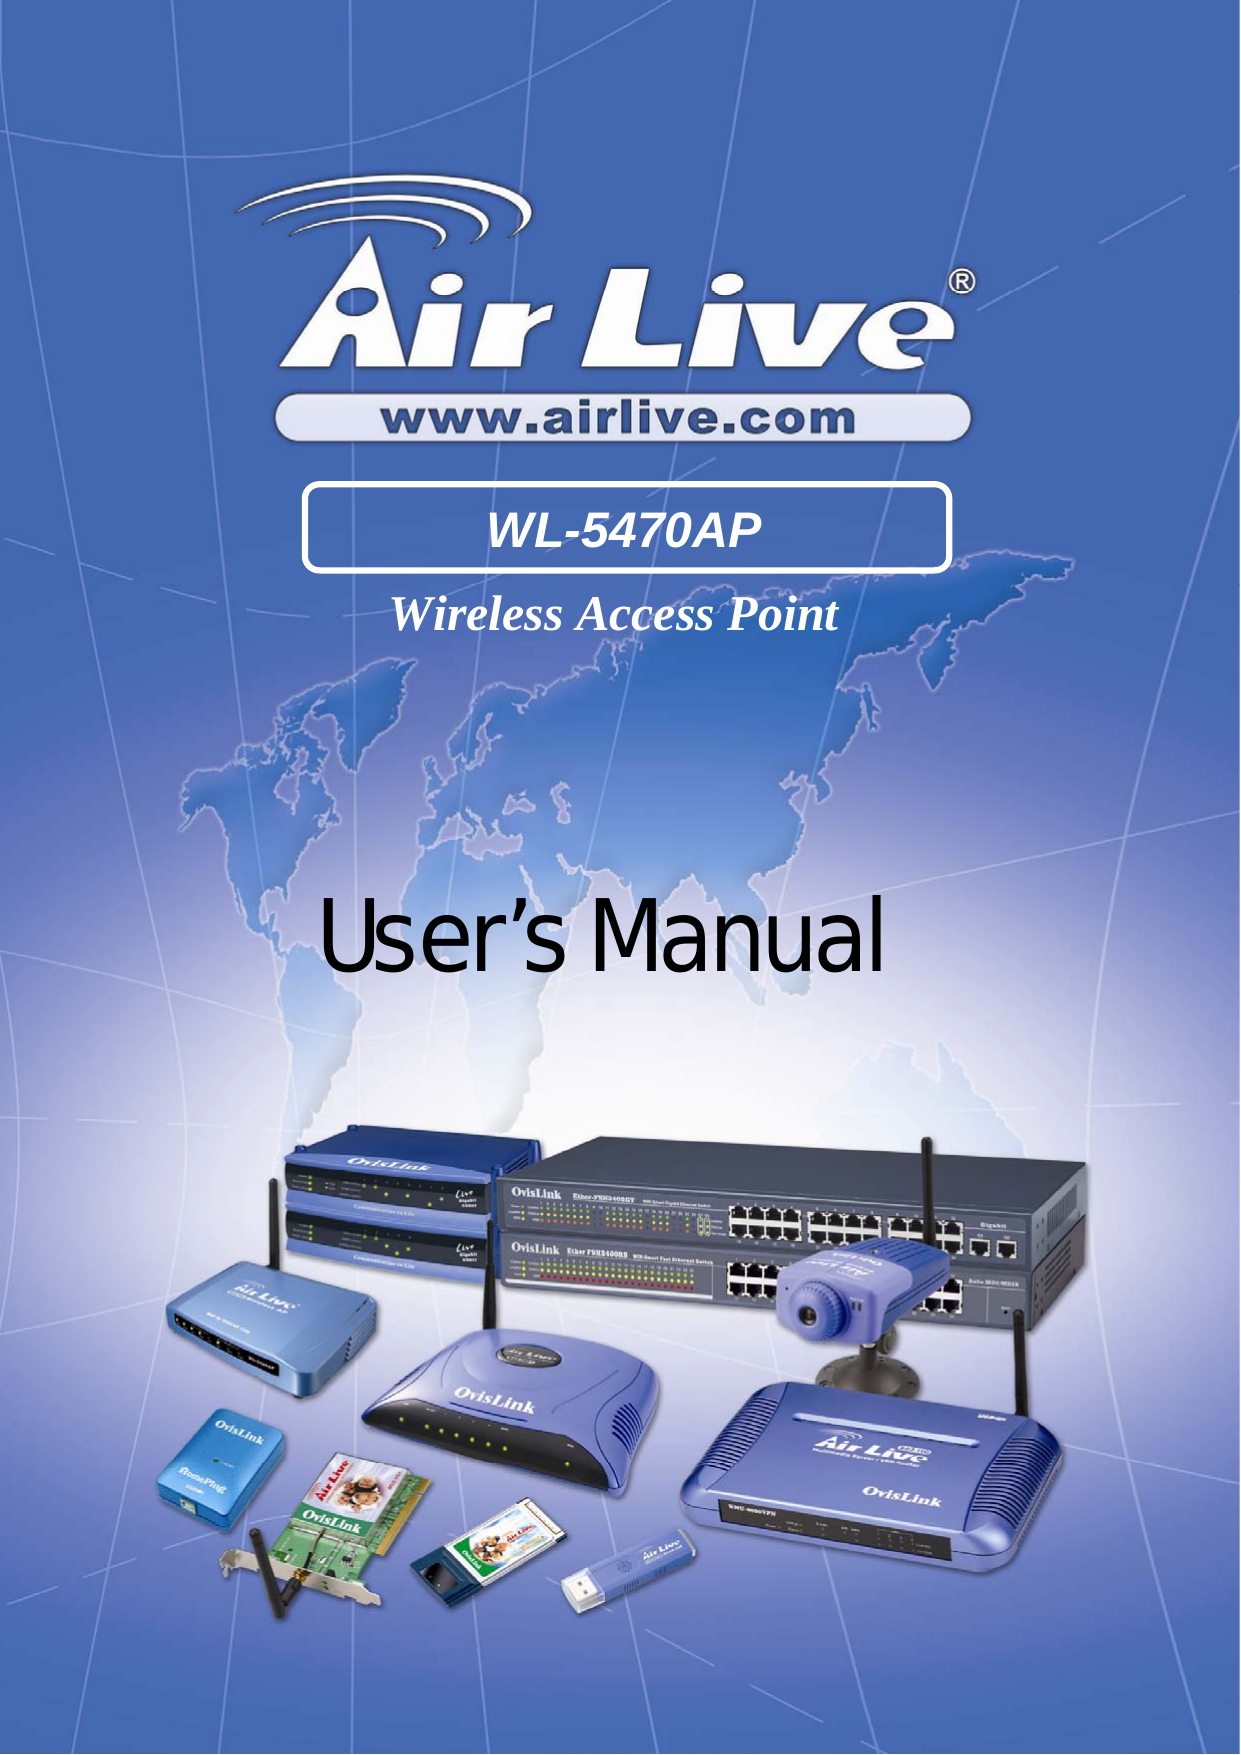                                                           1                                  WL5470AP User’s Manual User’s Manual Wireless Access Point WL-5470AP 